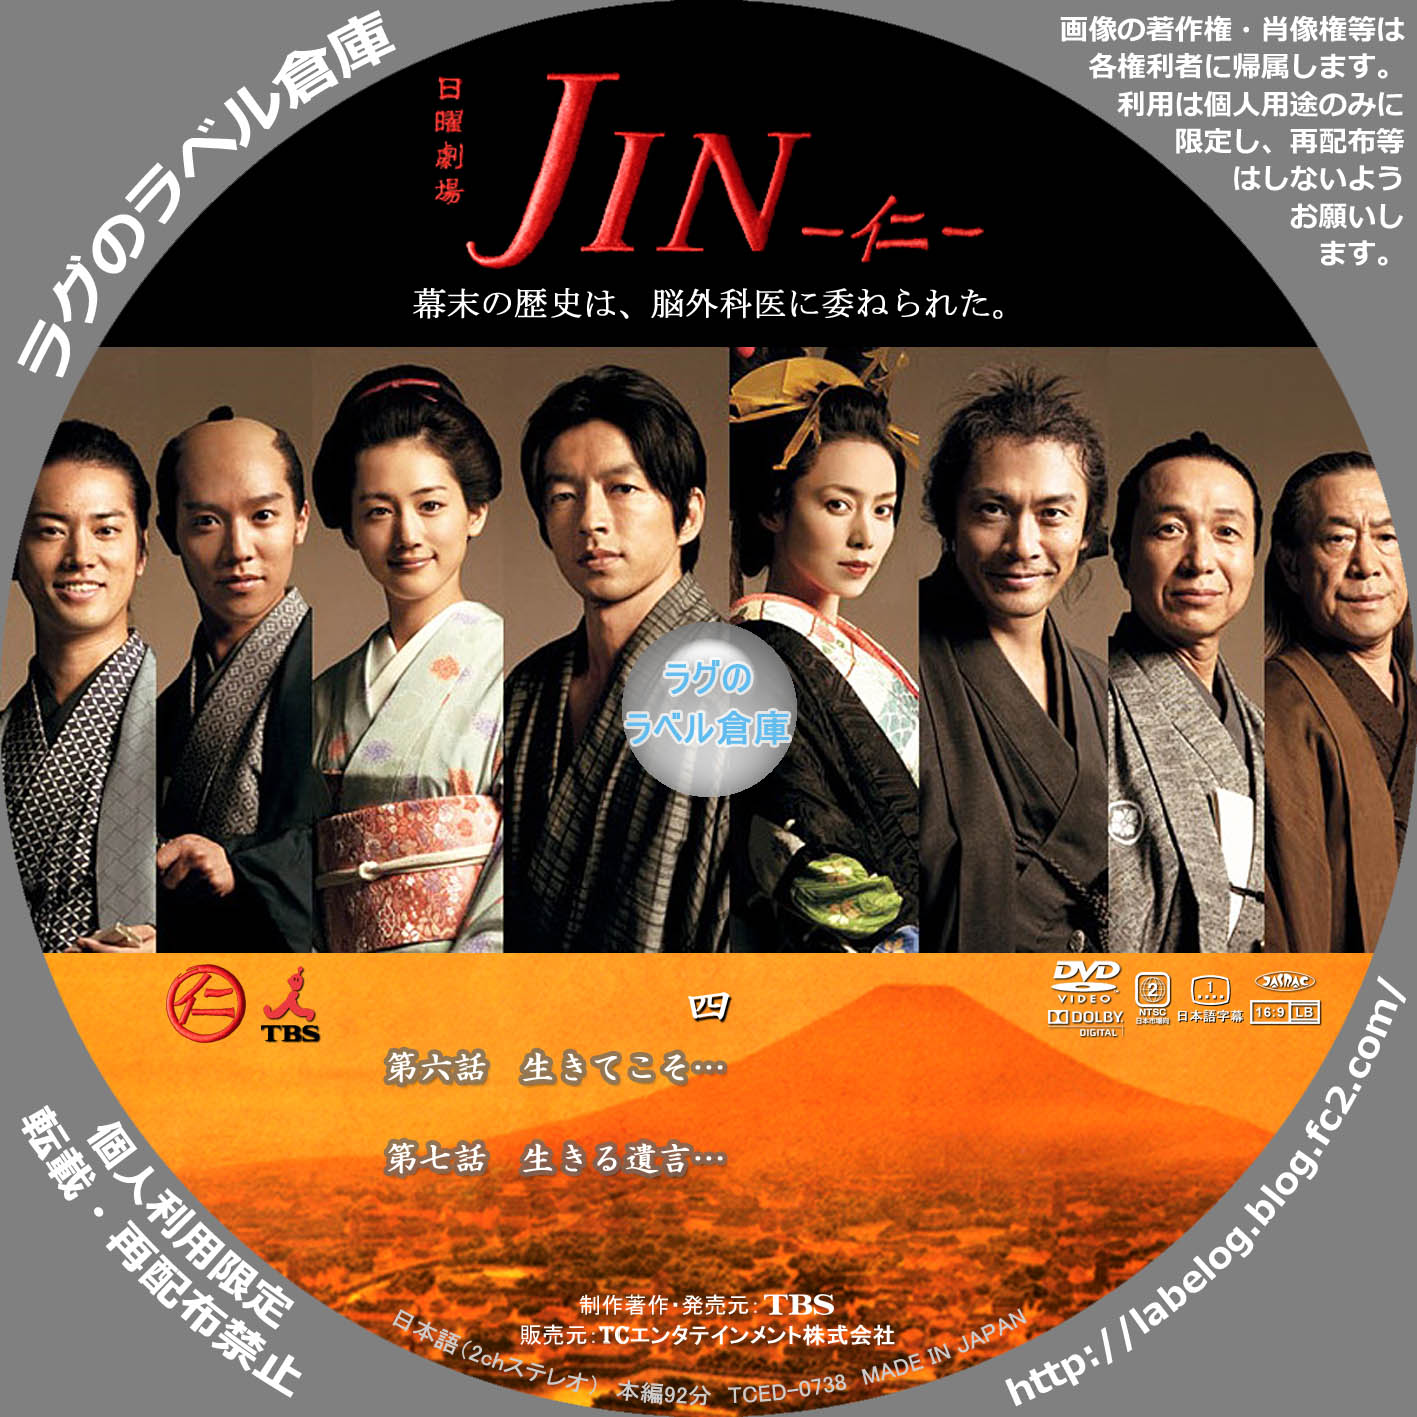 JIN-仁 Blu-ray BOX/ JIN-仁-完結編 Blu-ray BOX大沢たかお綾瀬はるか森下佳子